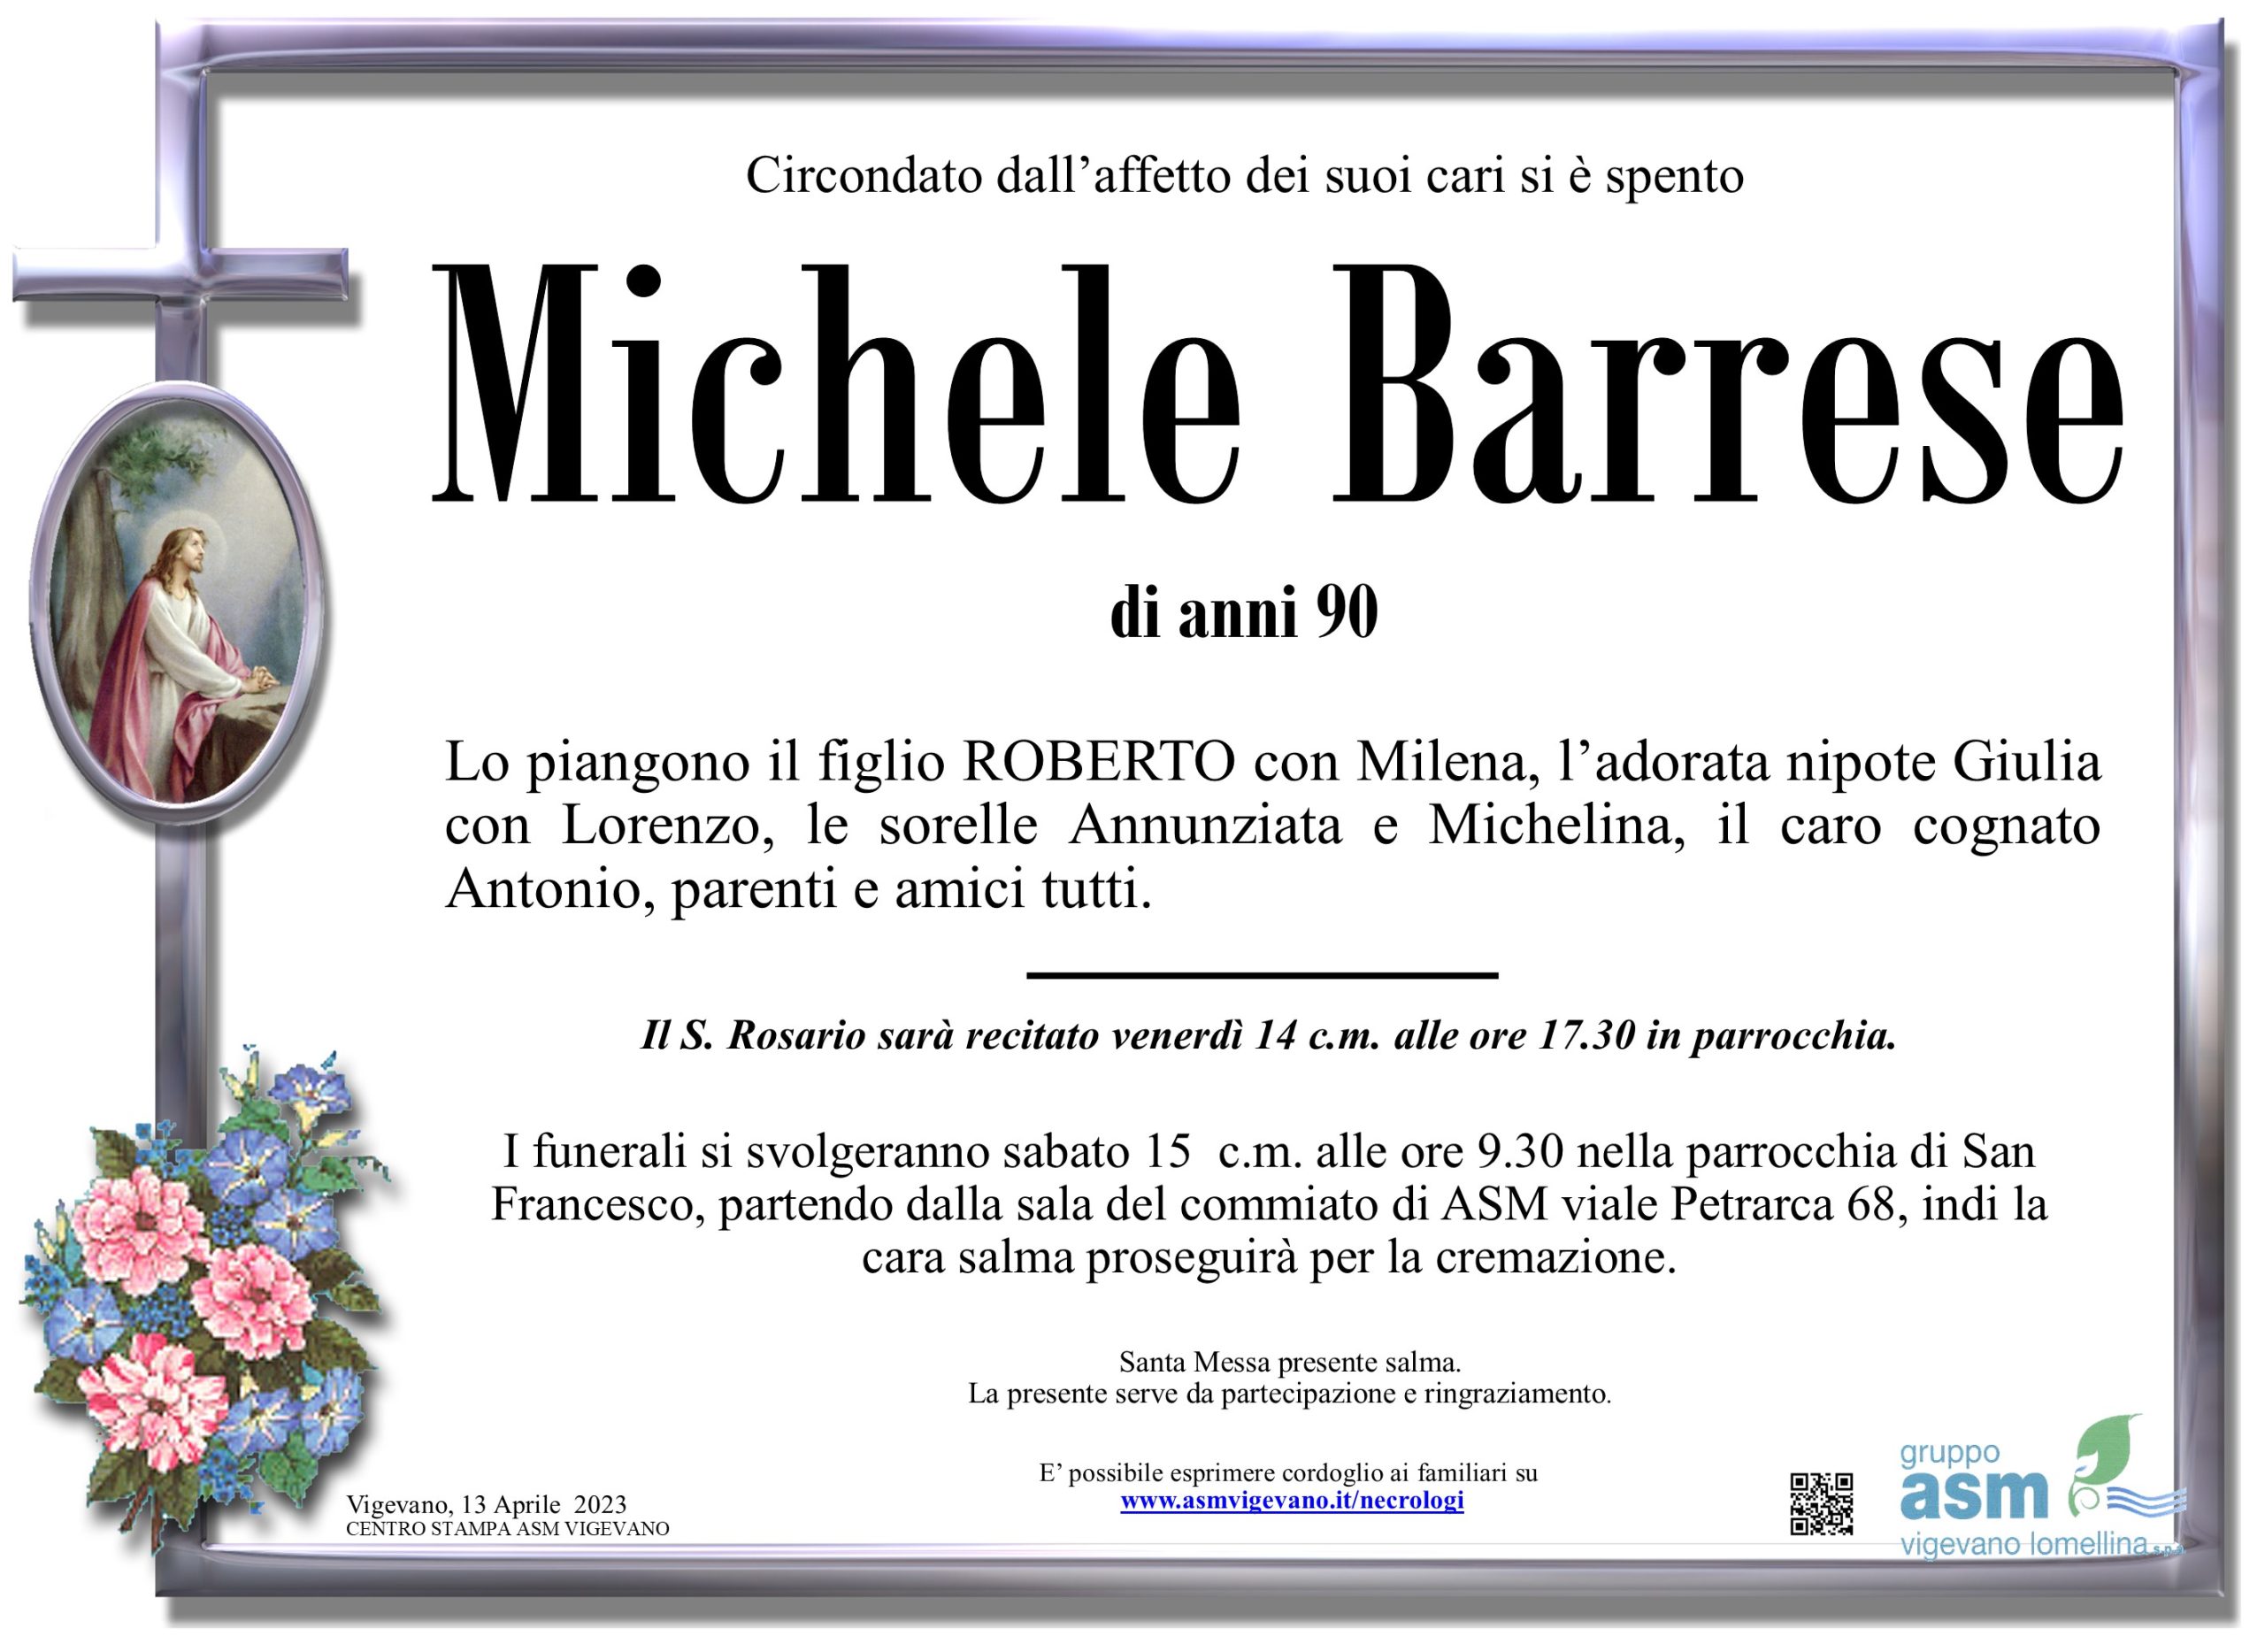 Michele Barrese